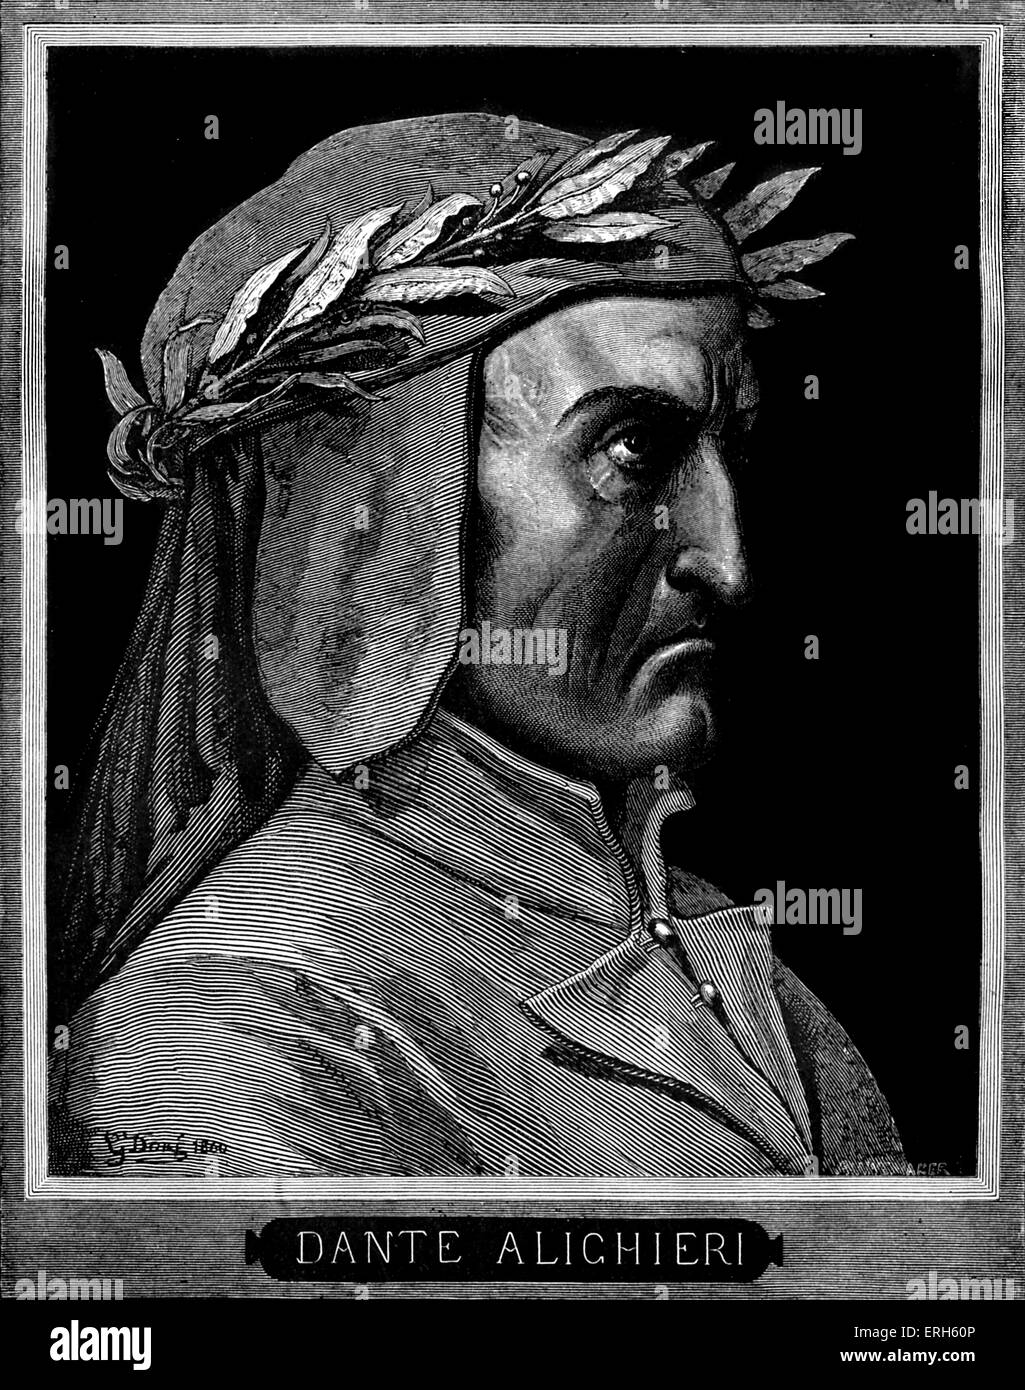 Dante Alighieri, profile portrait with laurel wreath.  Caption with name. Italian poet, 1265-1321. Stock Photo